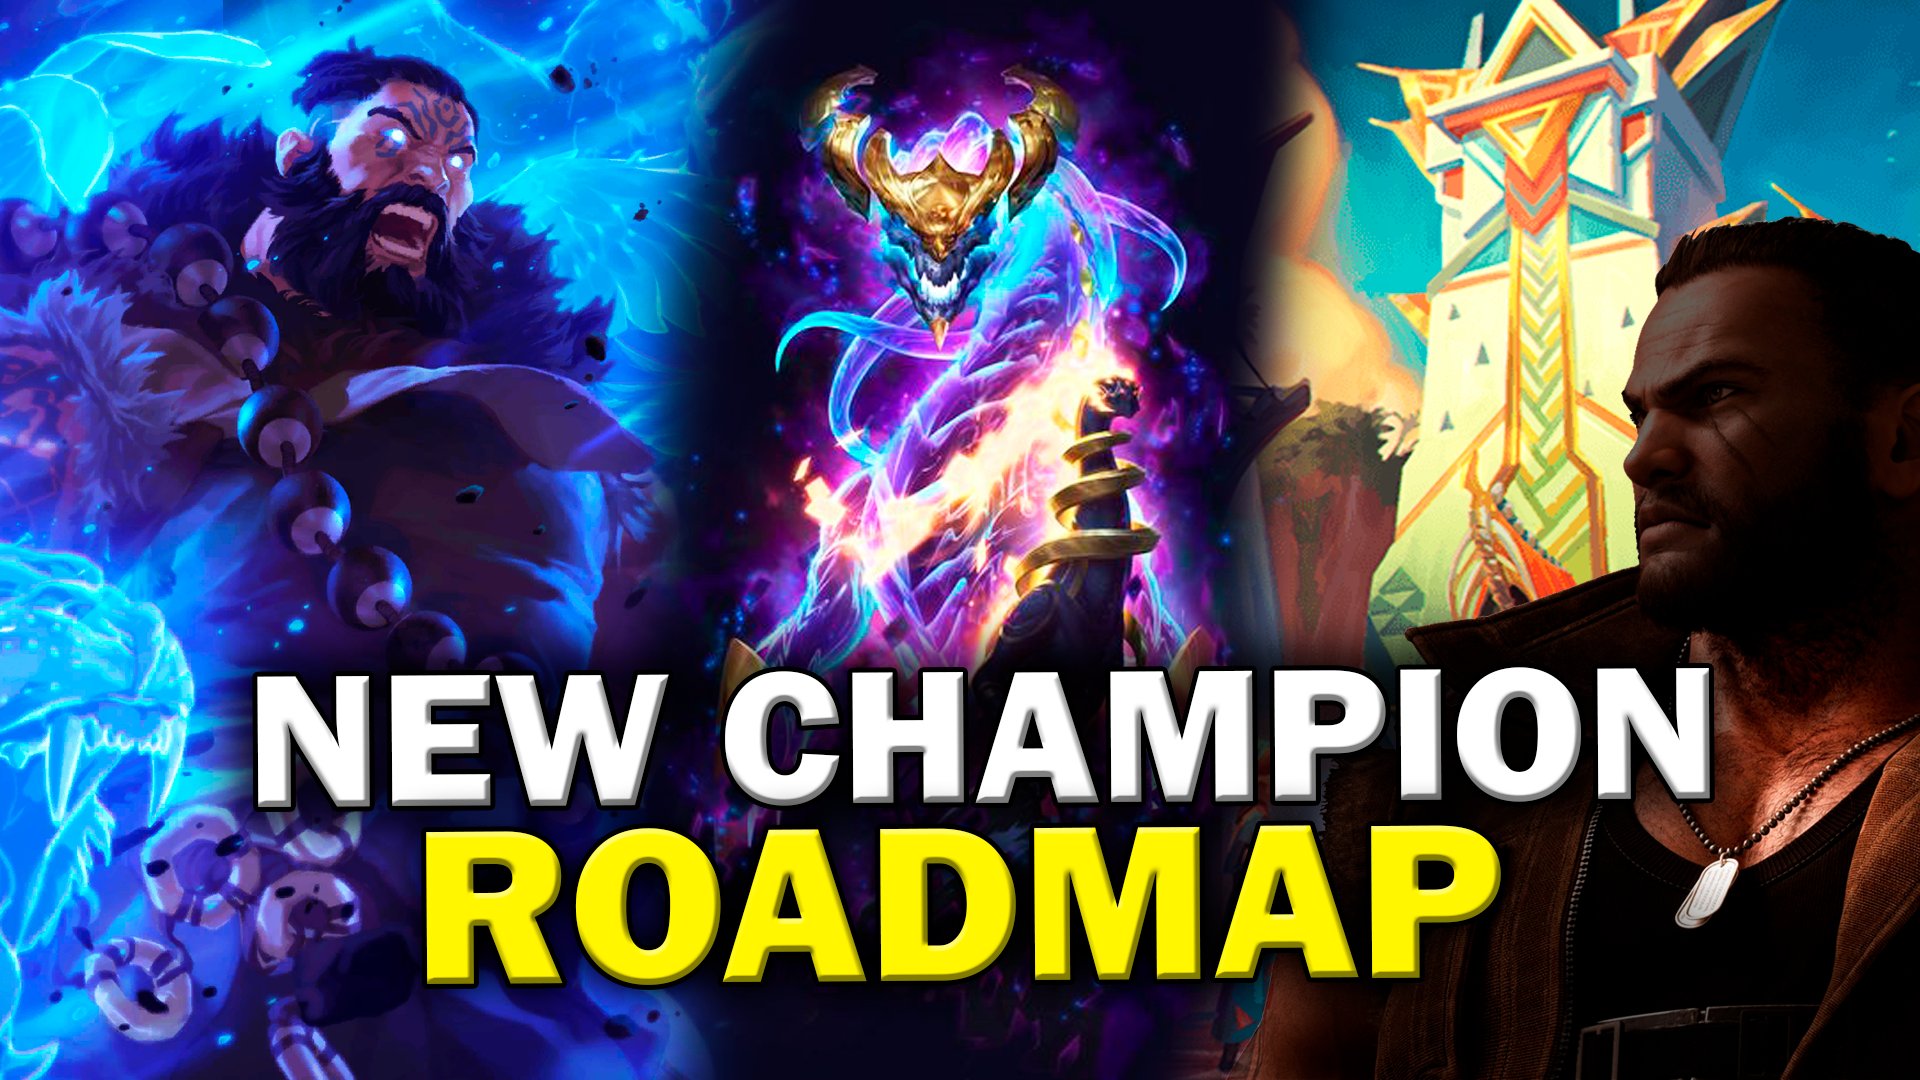 League of Legends' Champion Roadmap landing next week